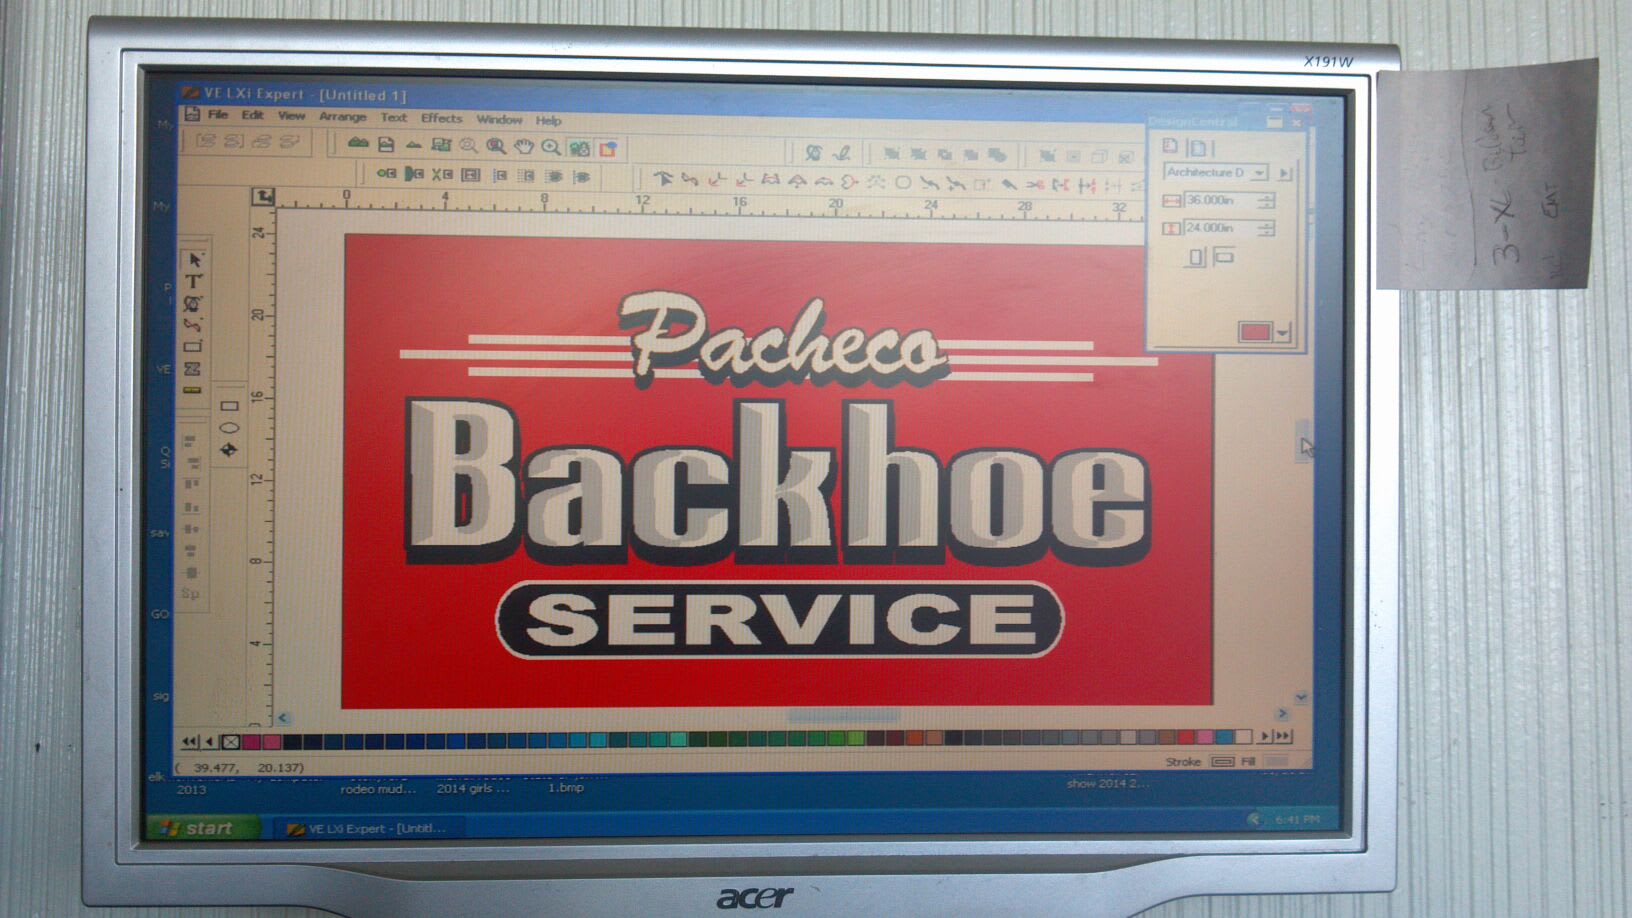 Pacheco Backhoe Service